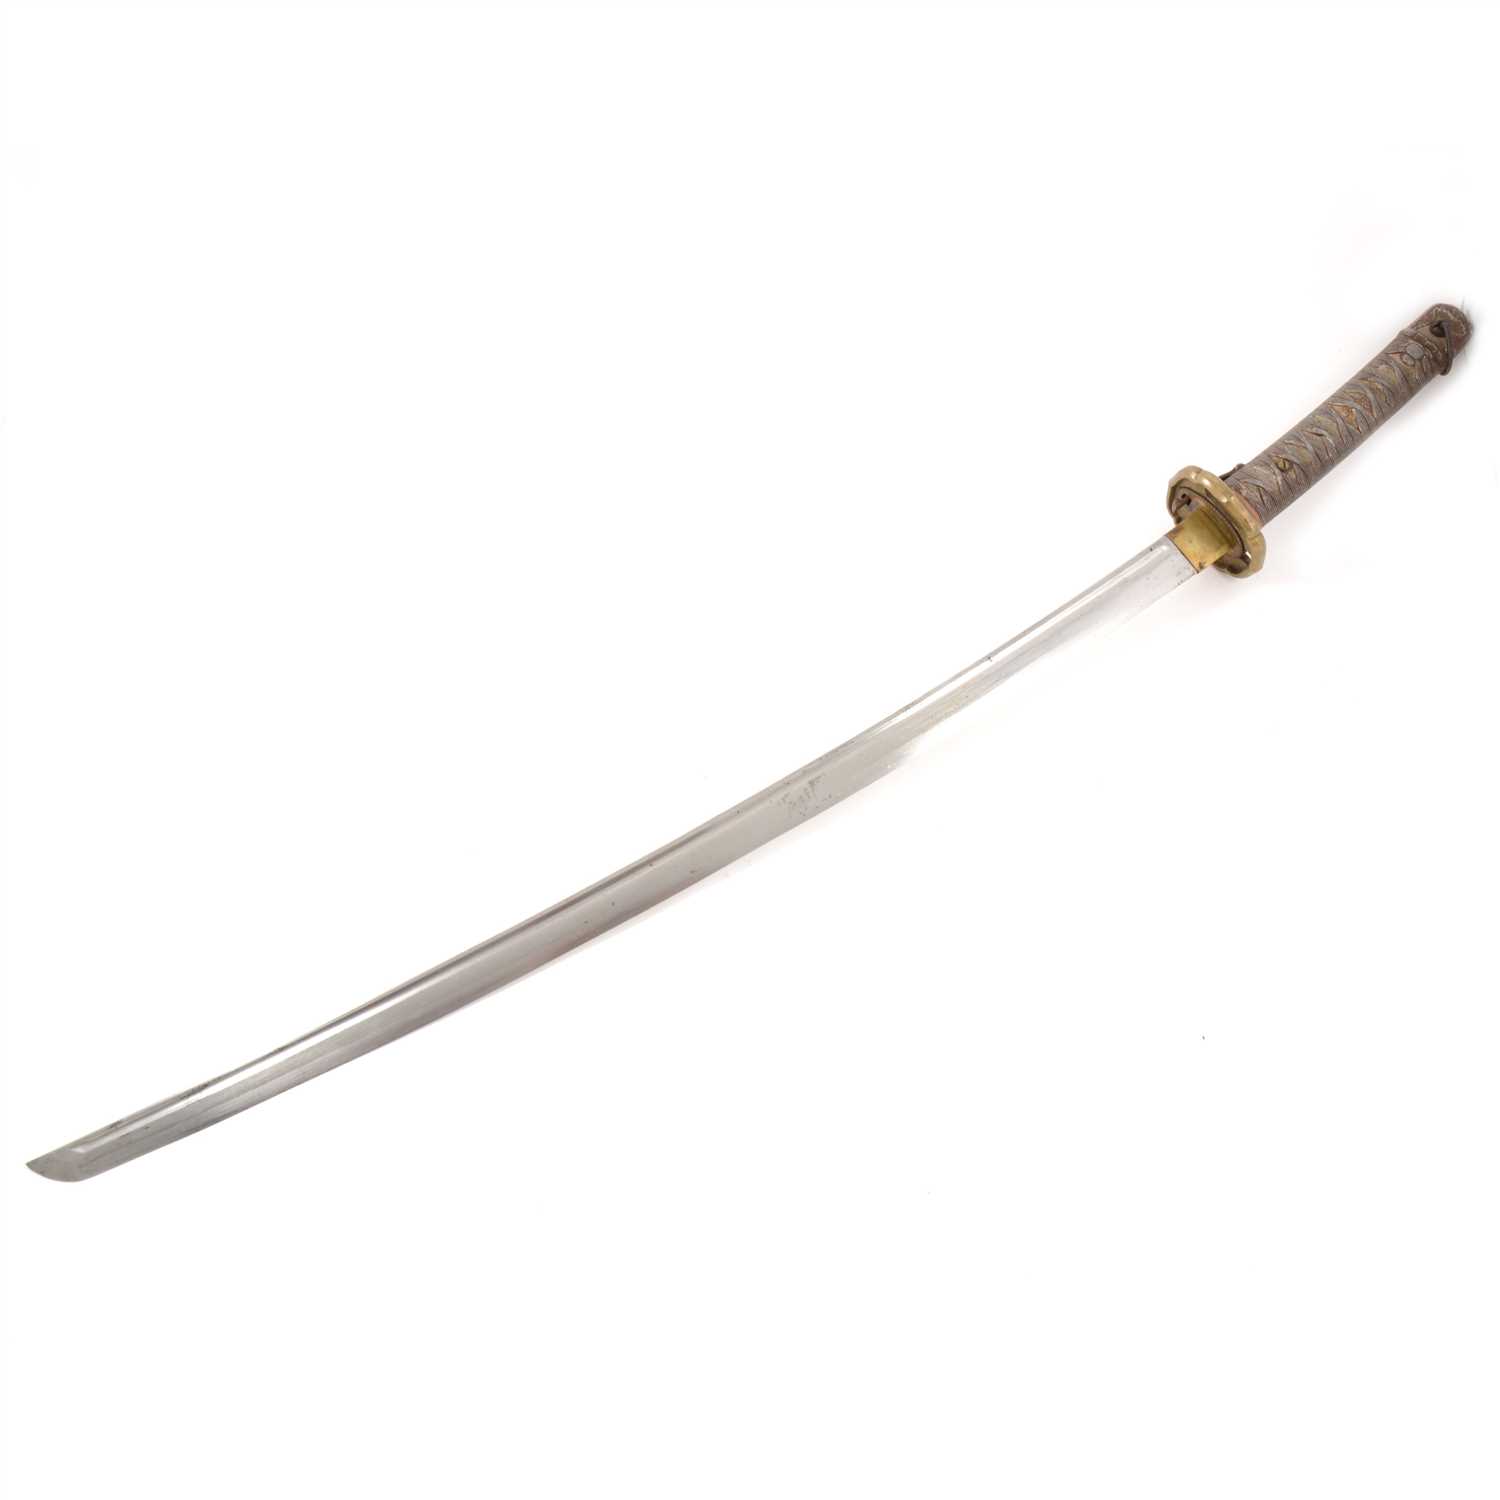 Lot 121 - WWII Japanese sword, blade 69cm, metal scabbard.